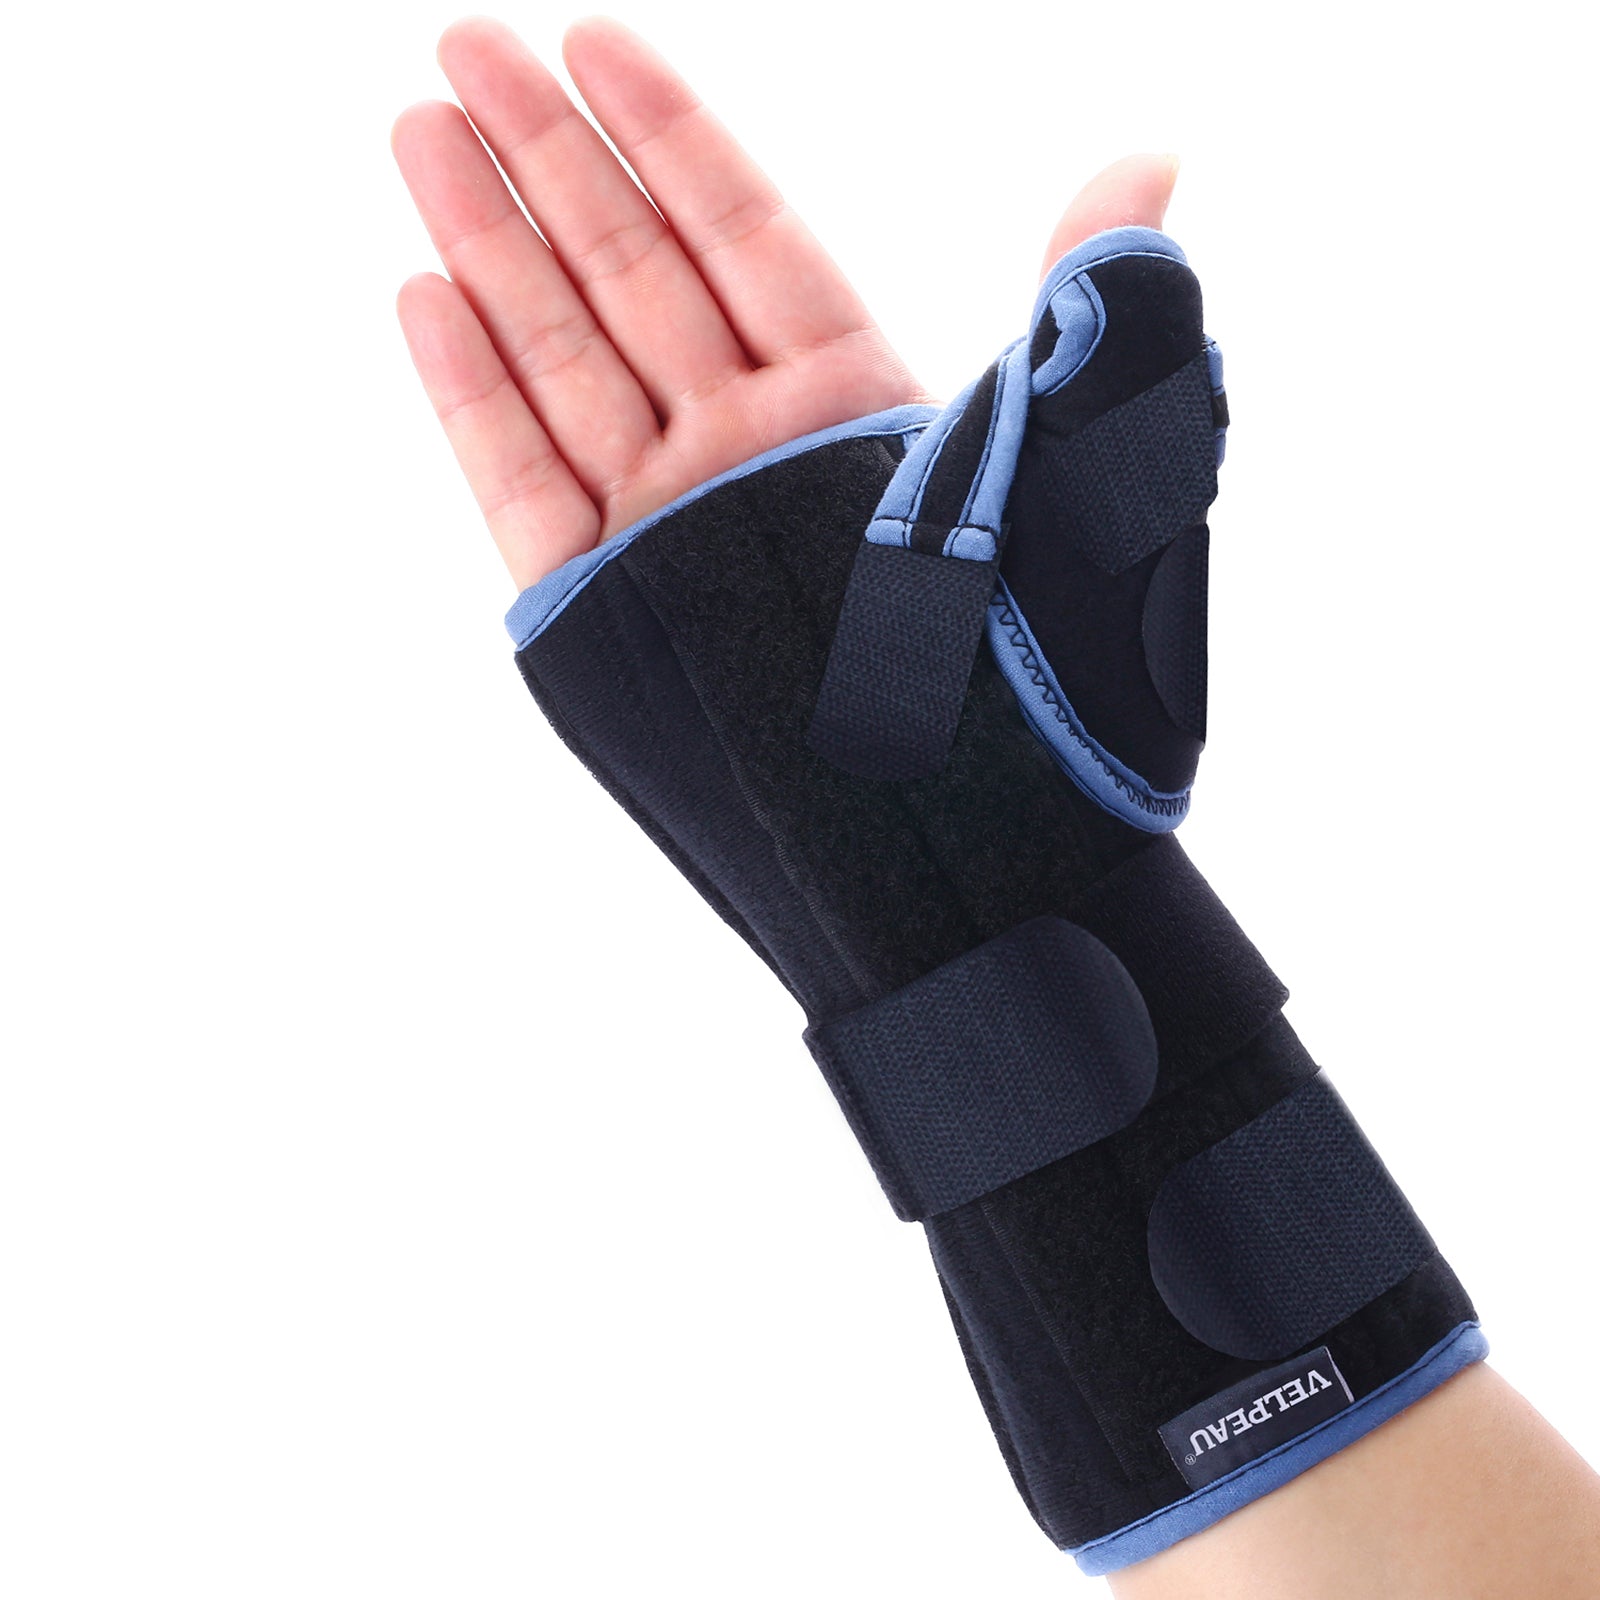 VP0902 VELPEAU Wrist Brace with Thumb Spica Splint Regular